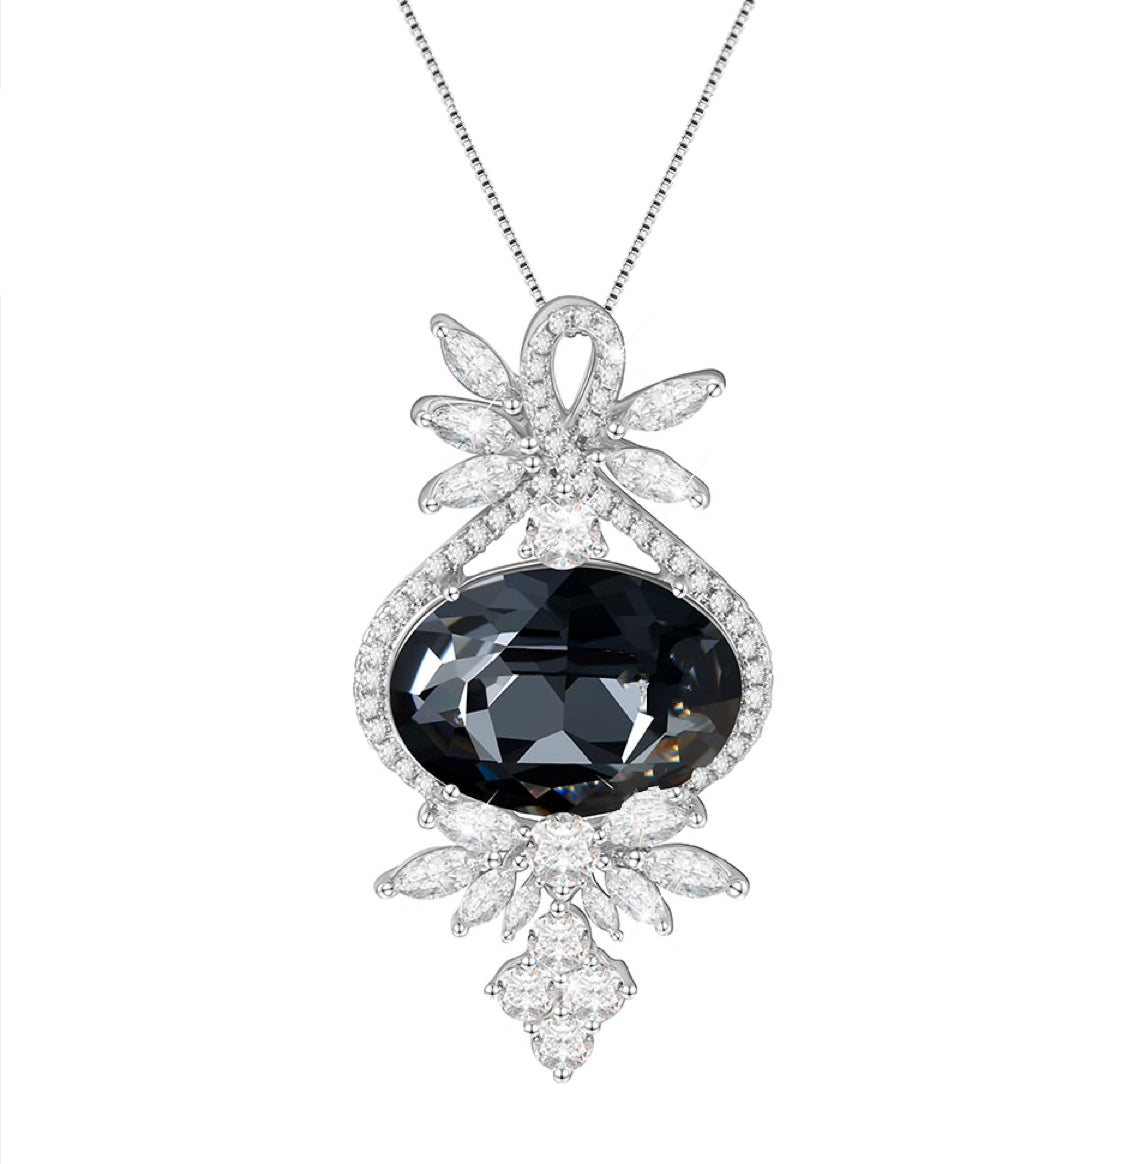 Black Swarovski Crystal Ornate Pendant Necklace